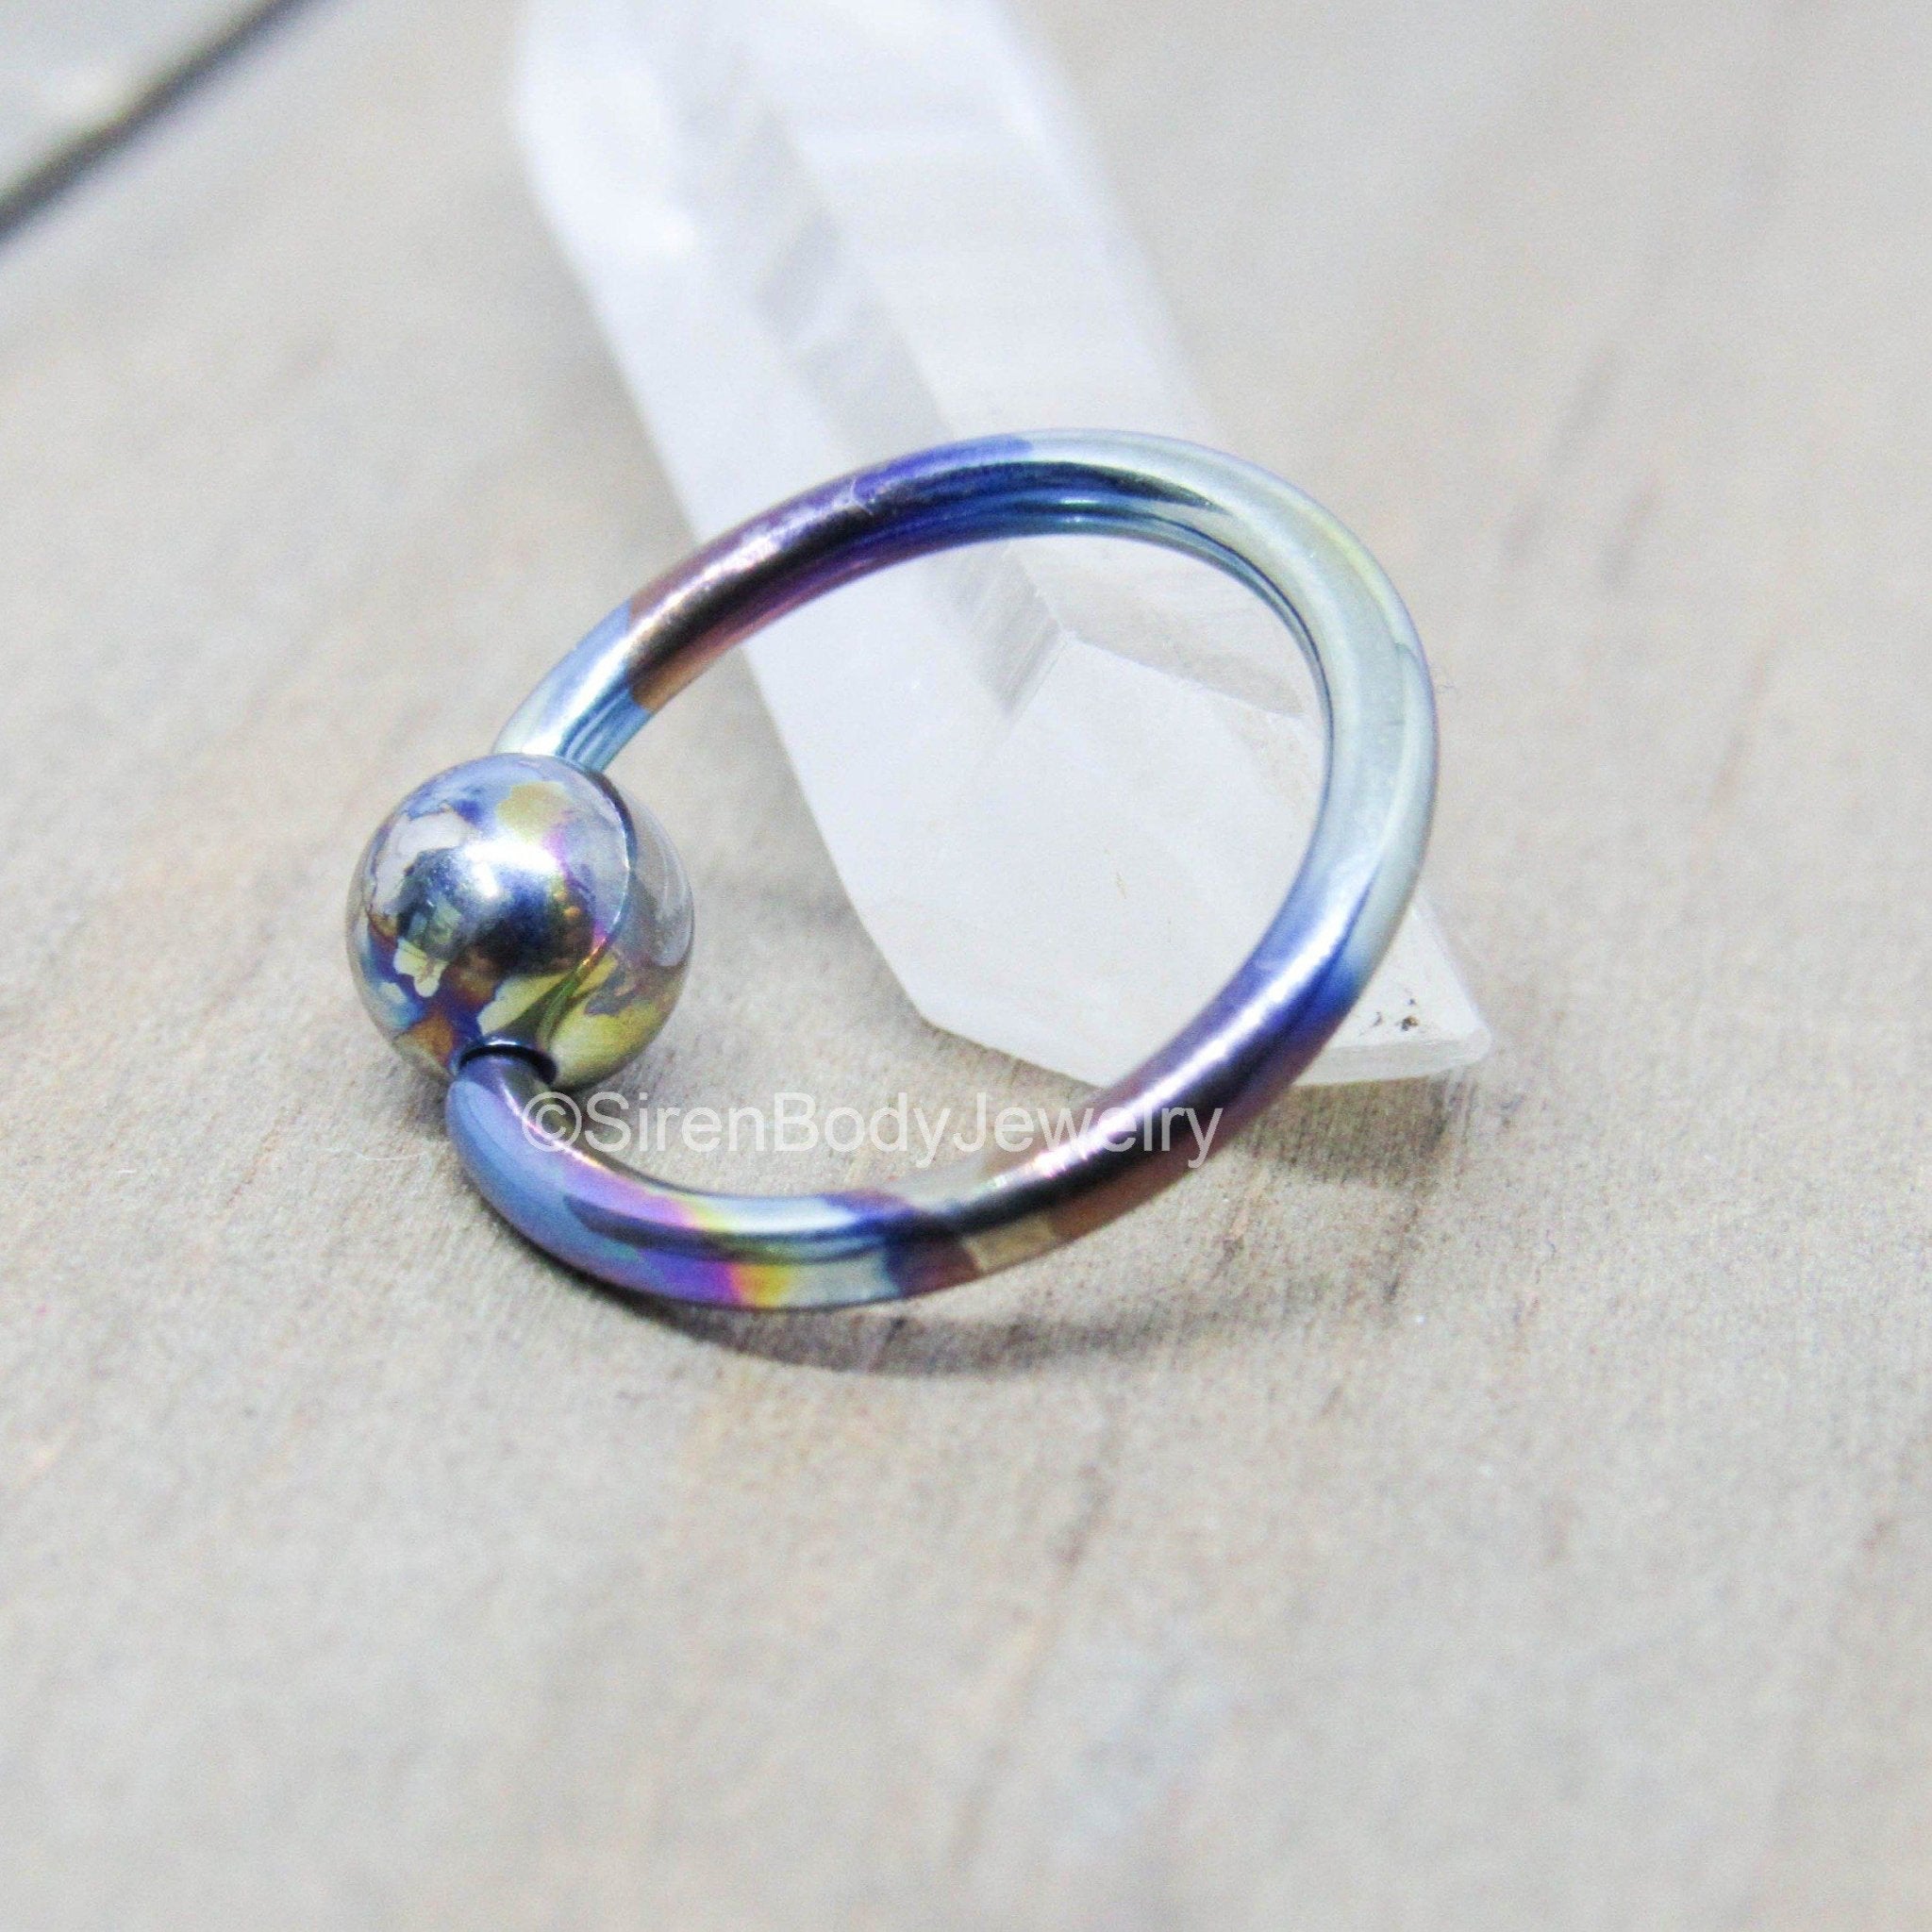 lip ring | A single captive bead ring in a lip | custompiercings | Flickr